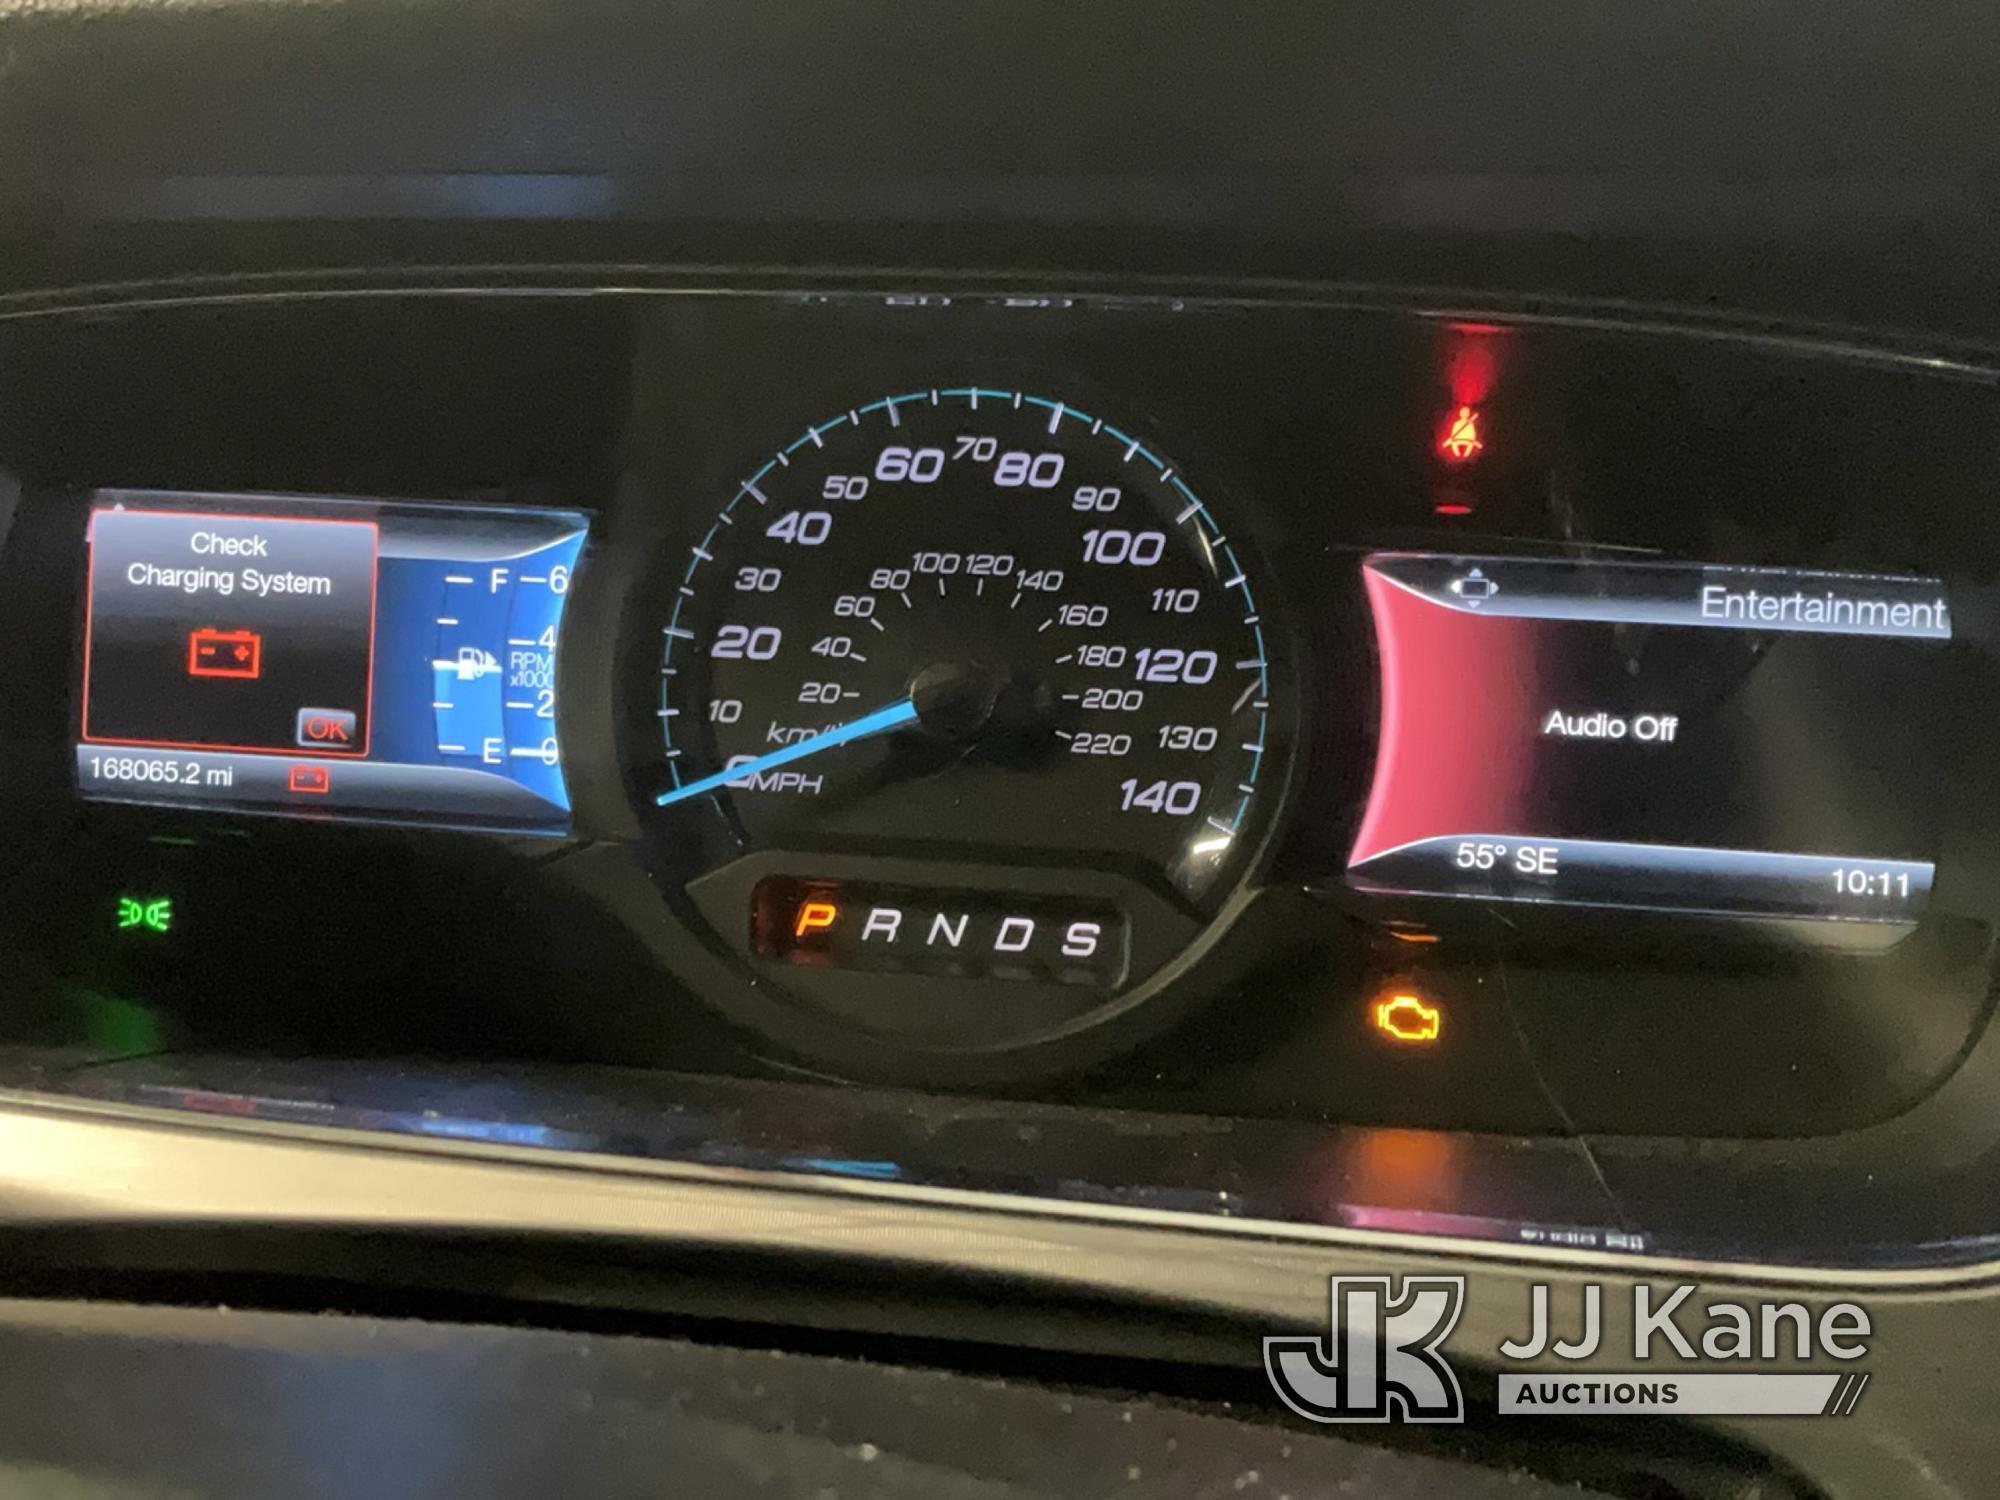 (Florence, SC) 2014 Ford Taurus 4-Door Sedan Runs & Moves) (Check Engine Light On, Check Charging Sy